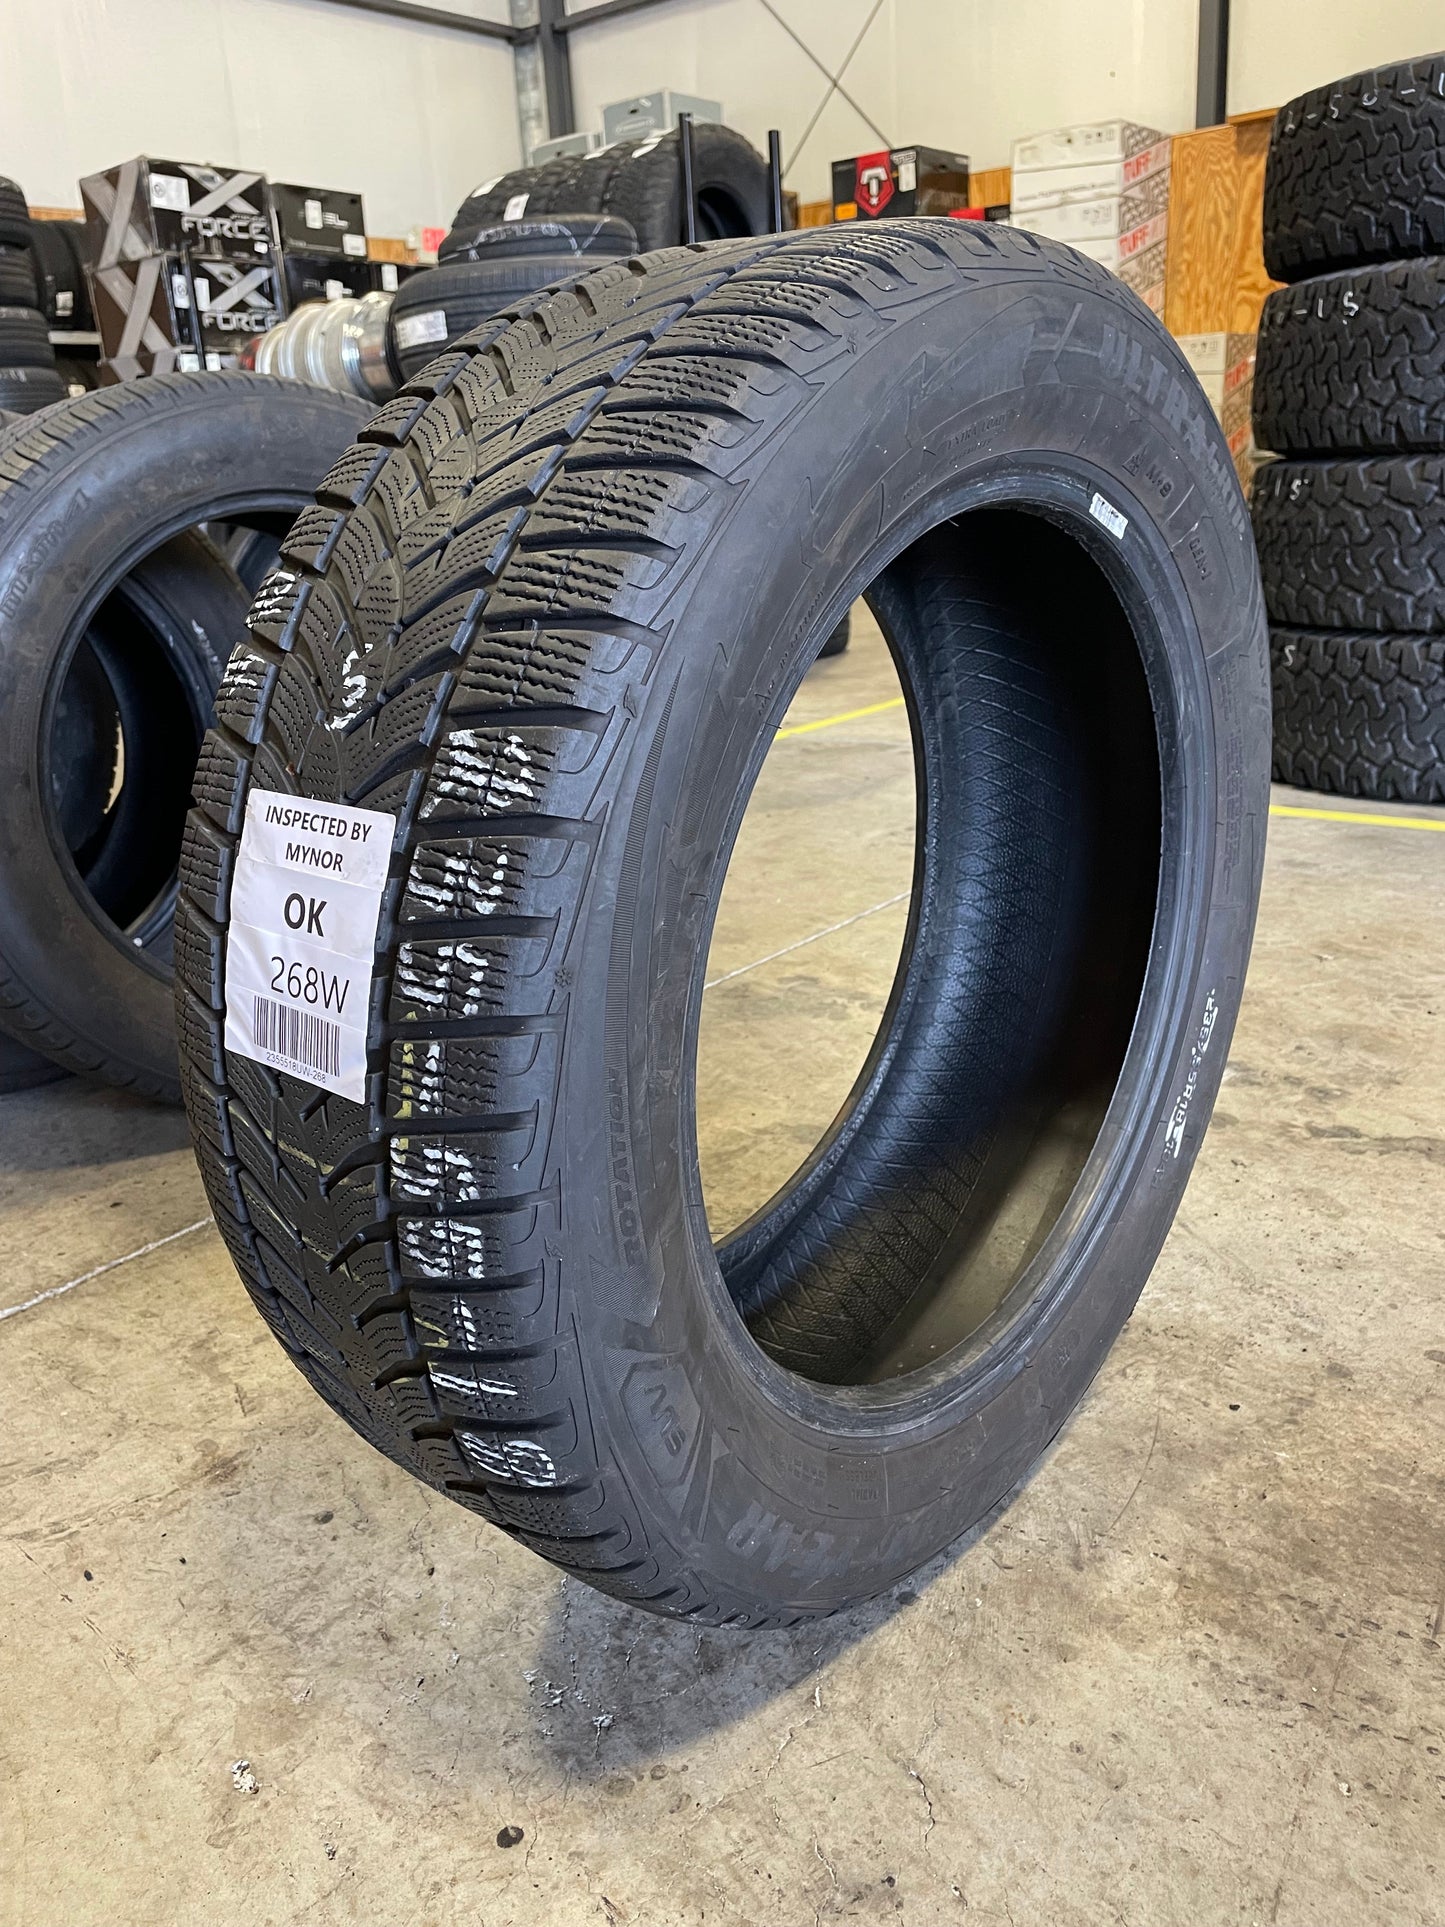 SINGLE 235/55R18 Goodyear Ultra grip 104 H XL - Used Tires